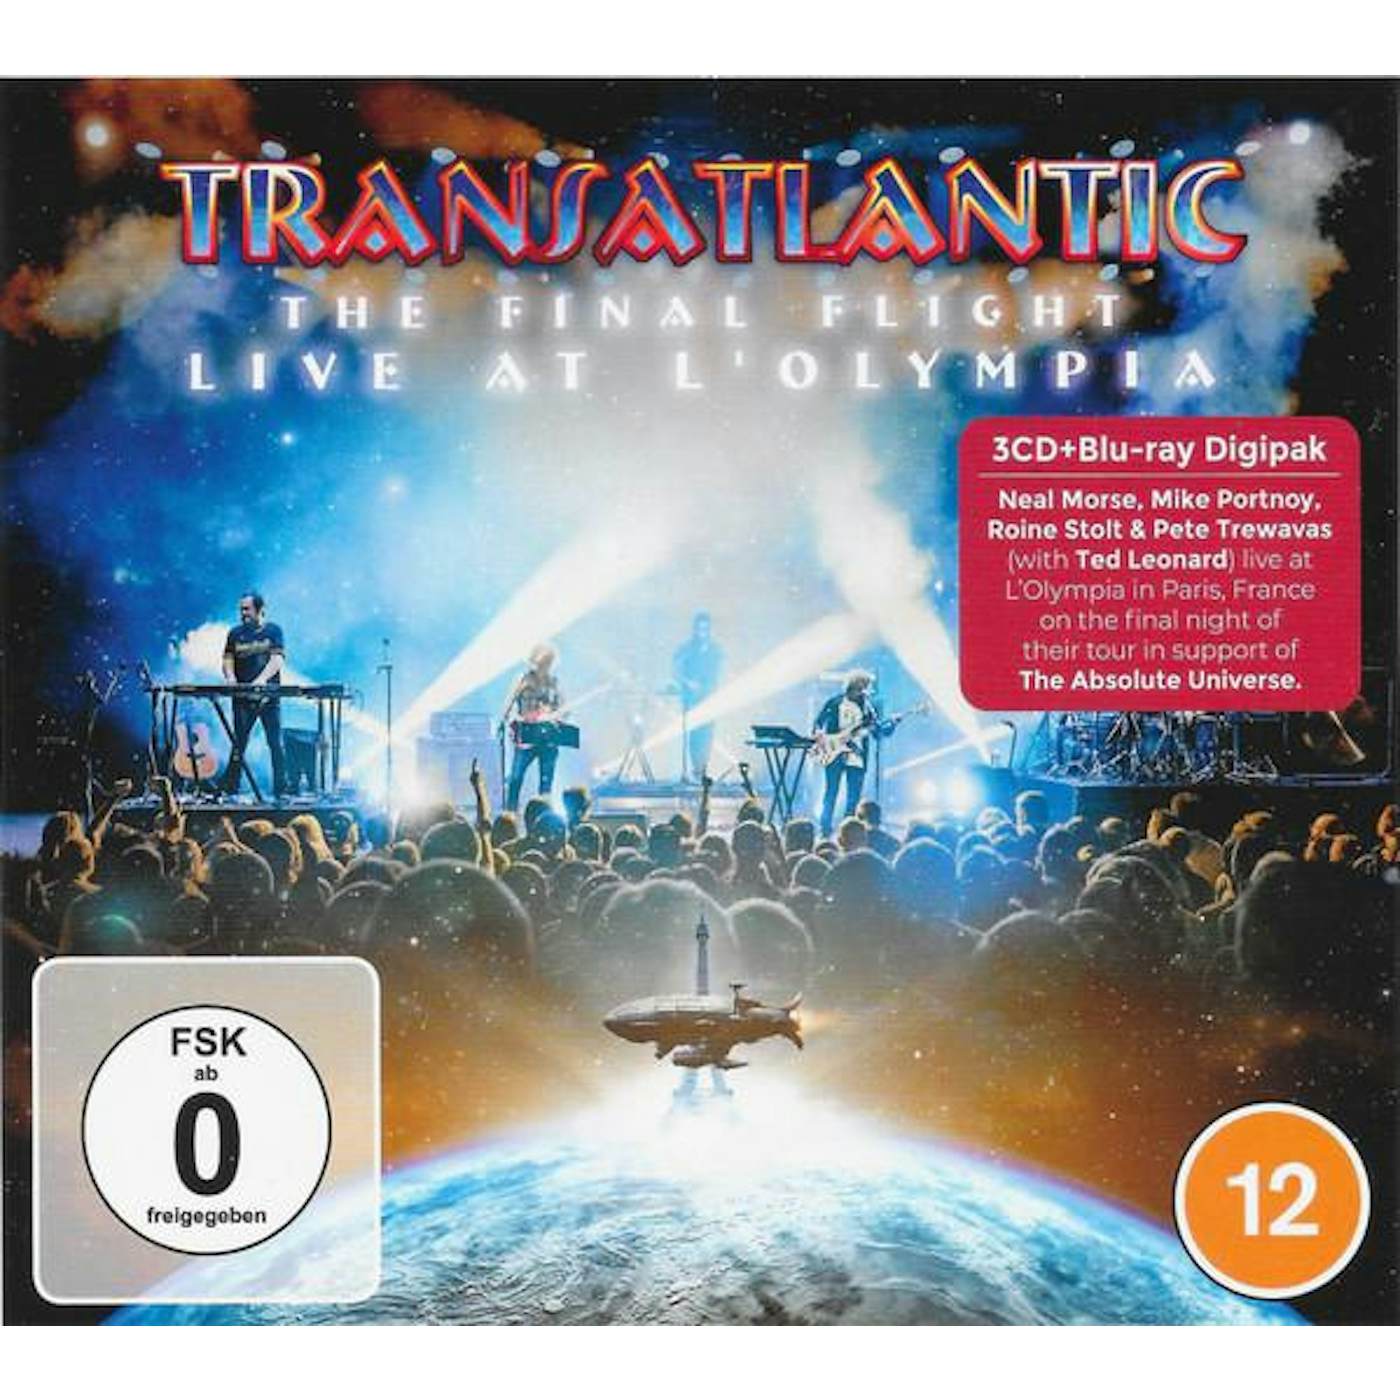 Transatlantic FINAL FLIGHT LIVE AT L'OLYMPIA (3CD/BD) CD